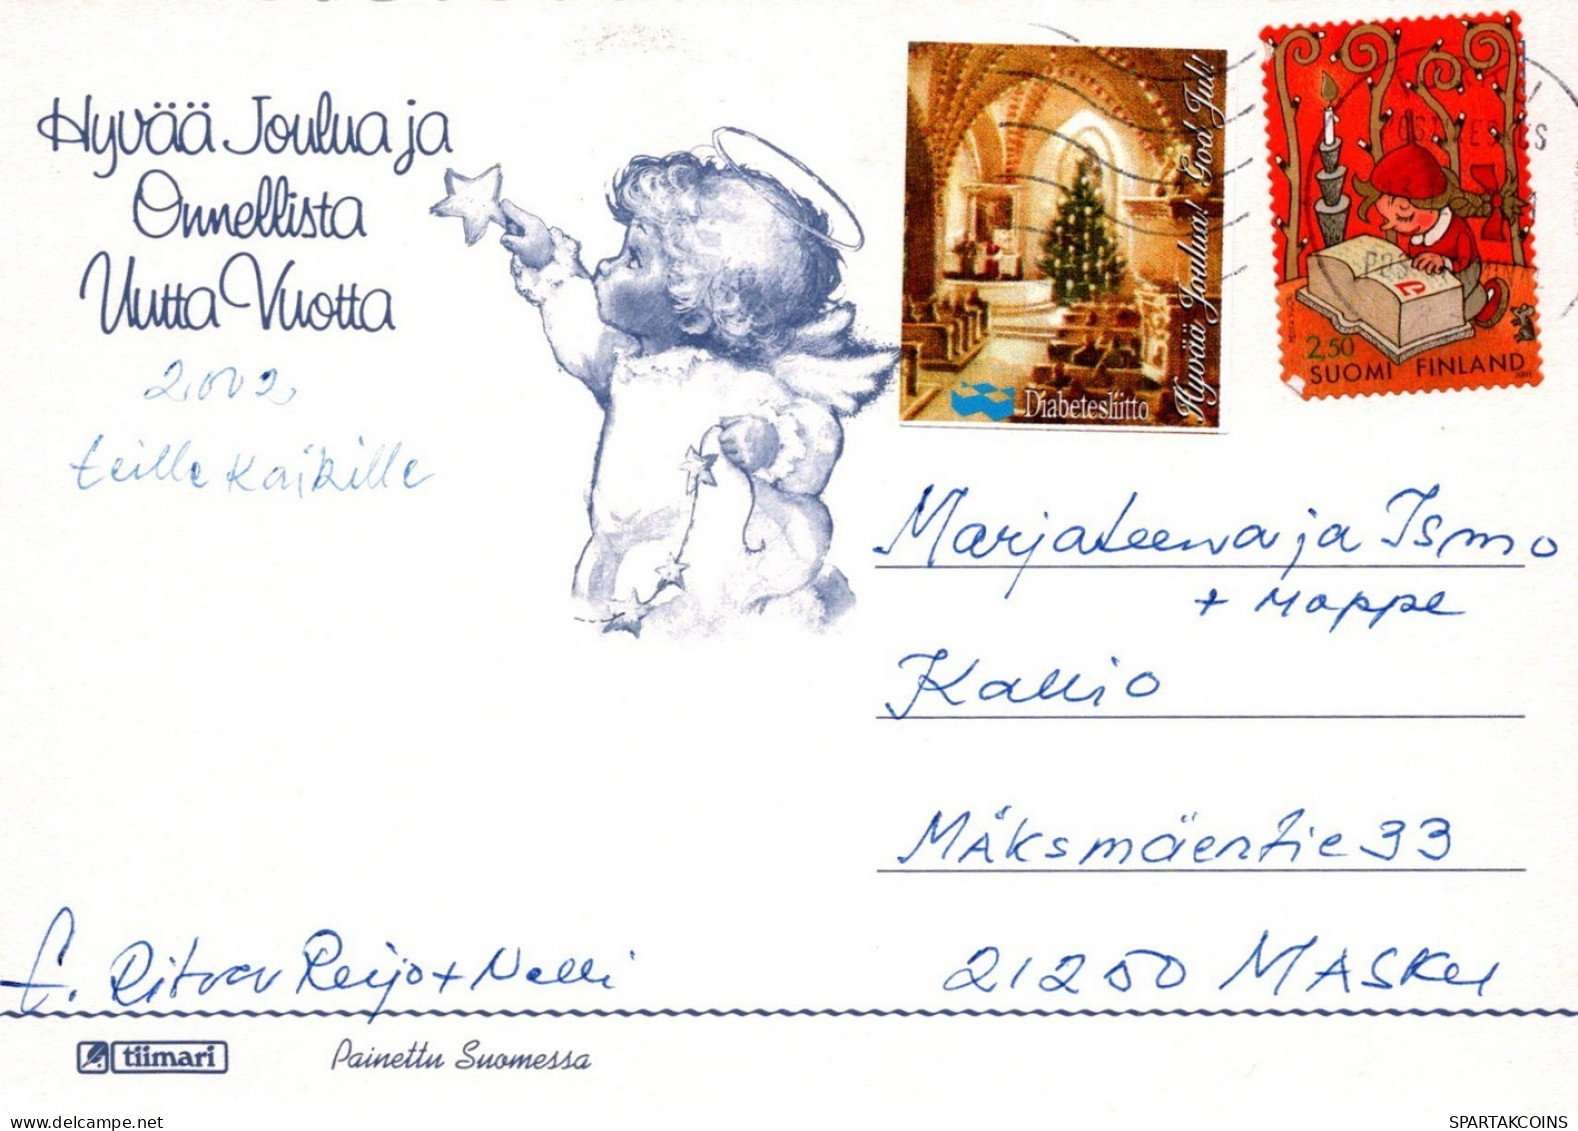 ANGEL CHRISTMAS Holidays Vintage Postcard CPSM #PAH939.GB - Anges